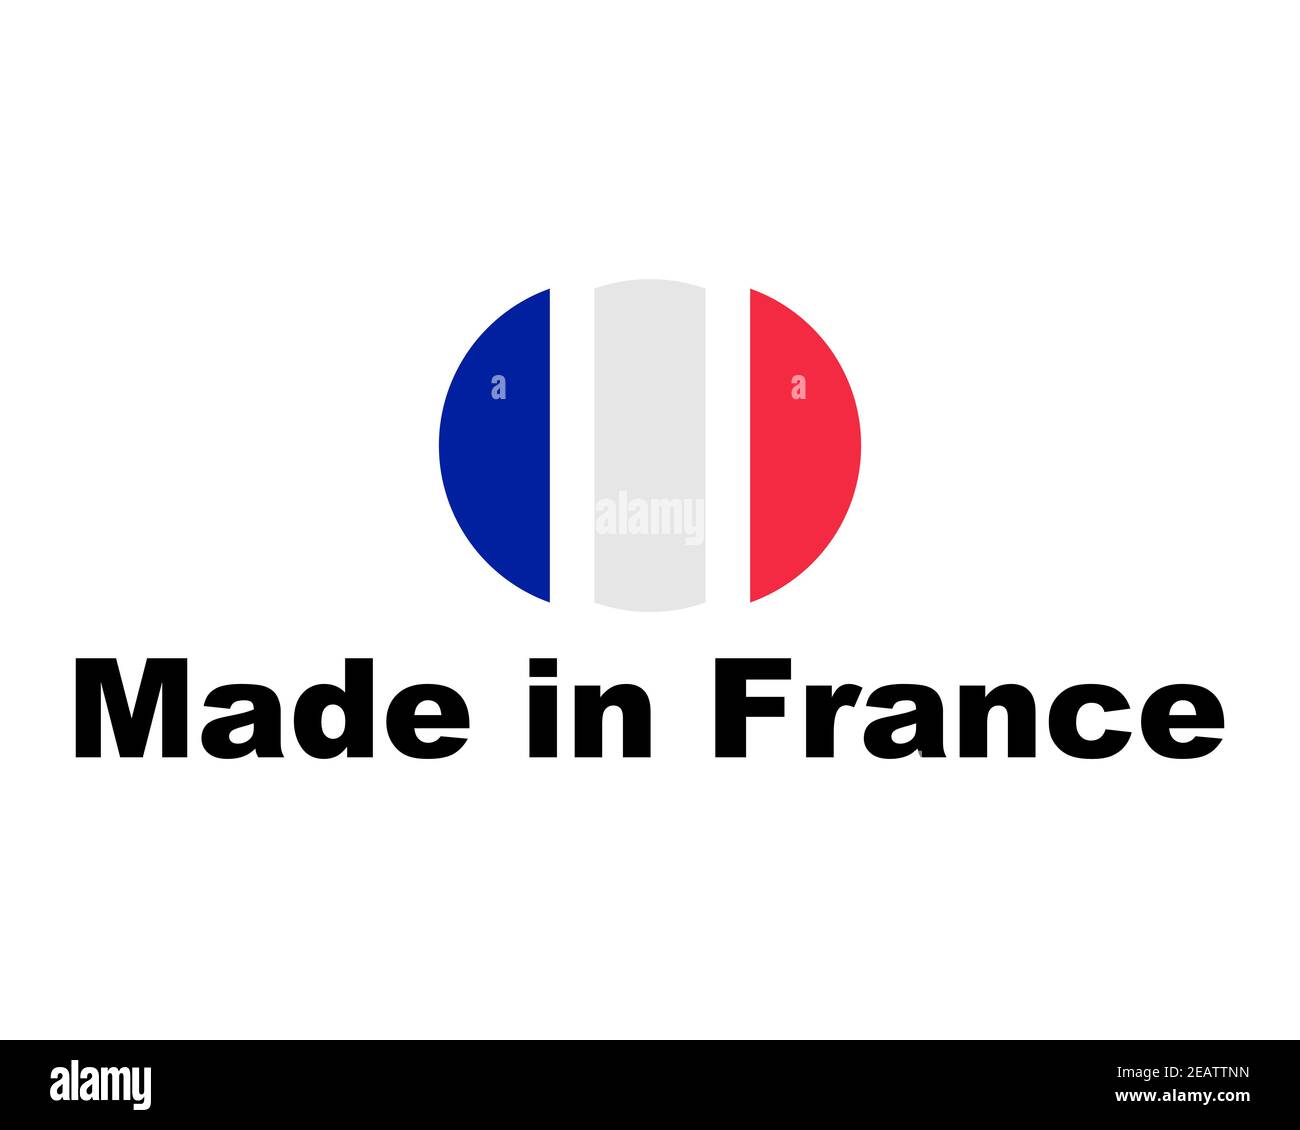 QualitÃ¤tssiegel Made in France Stock Photo